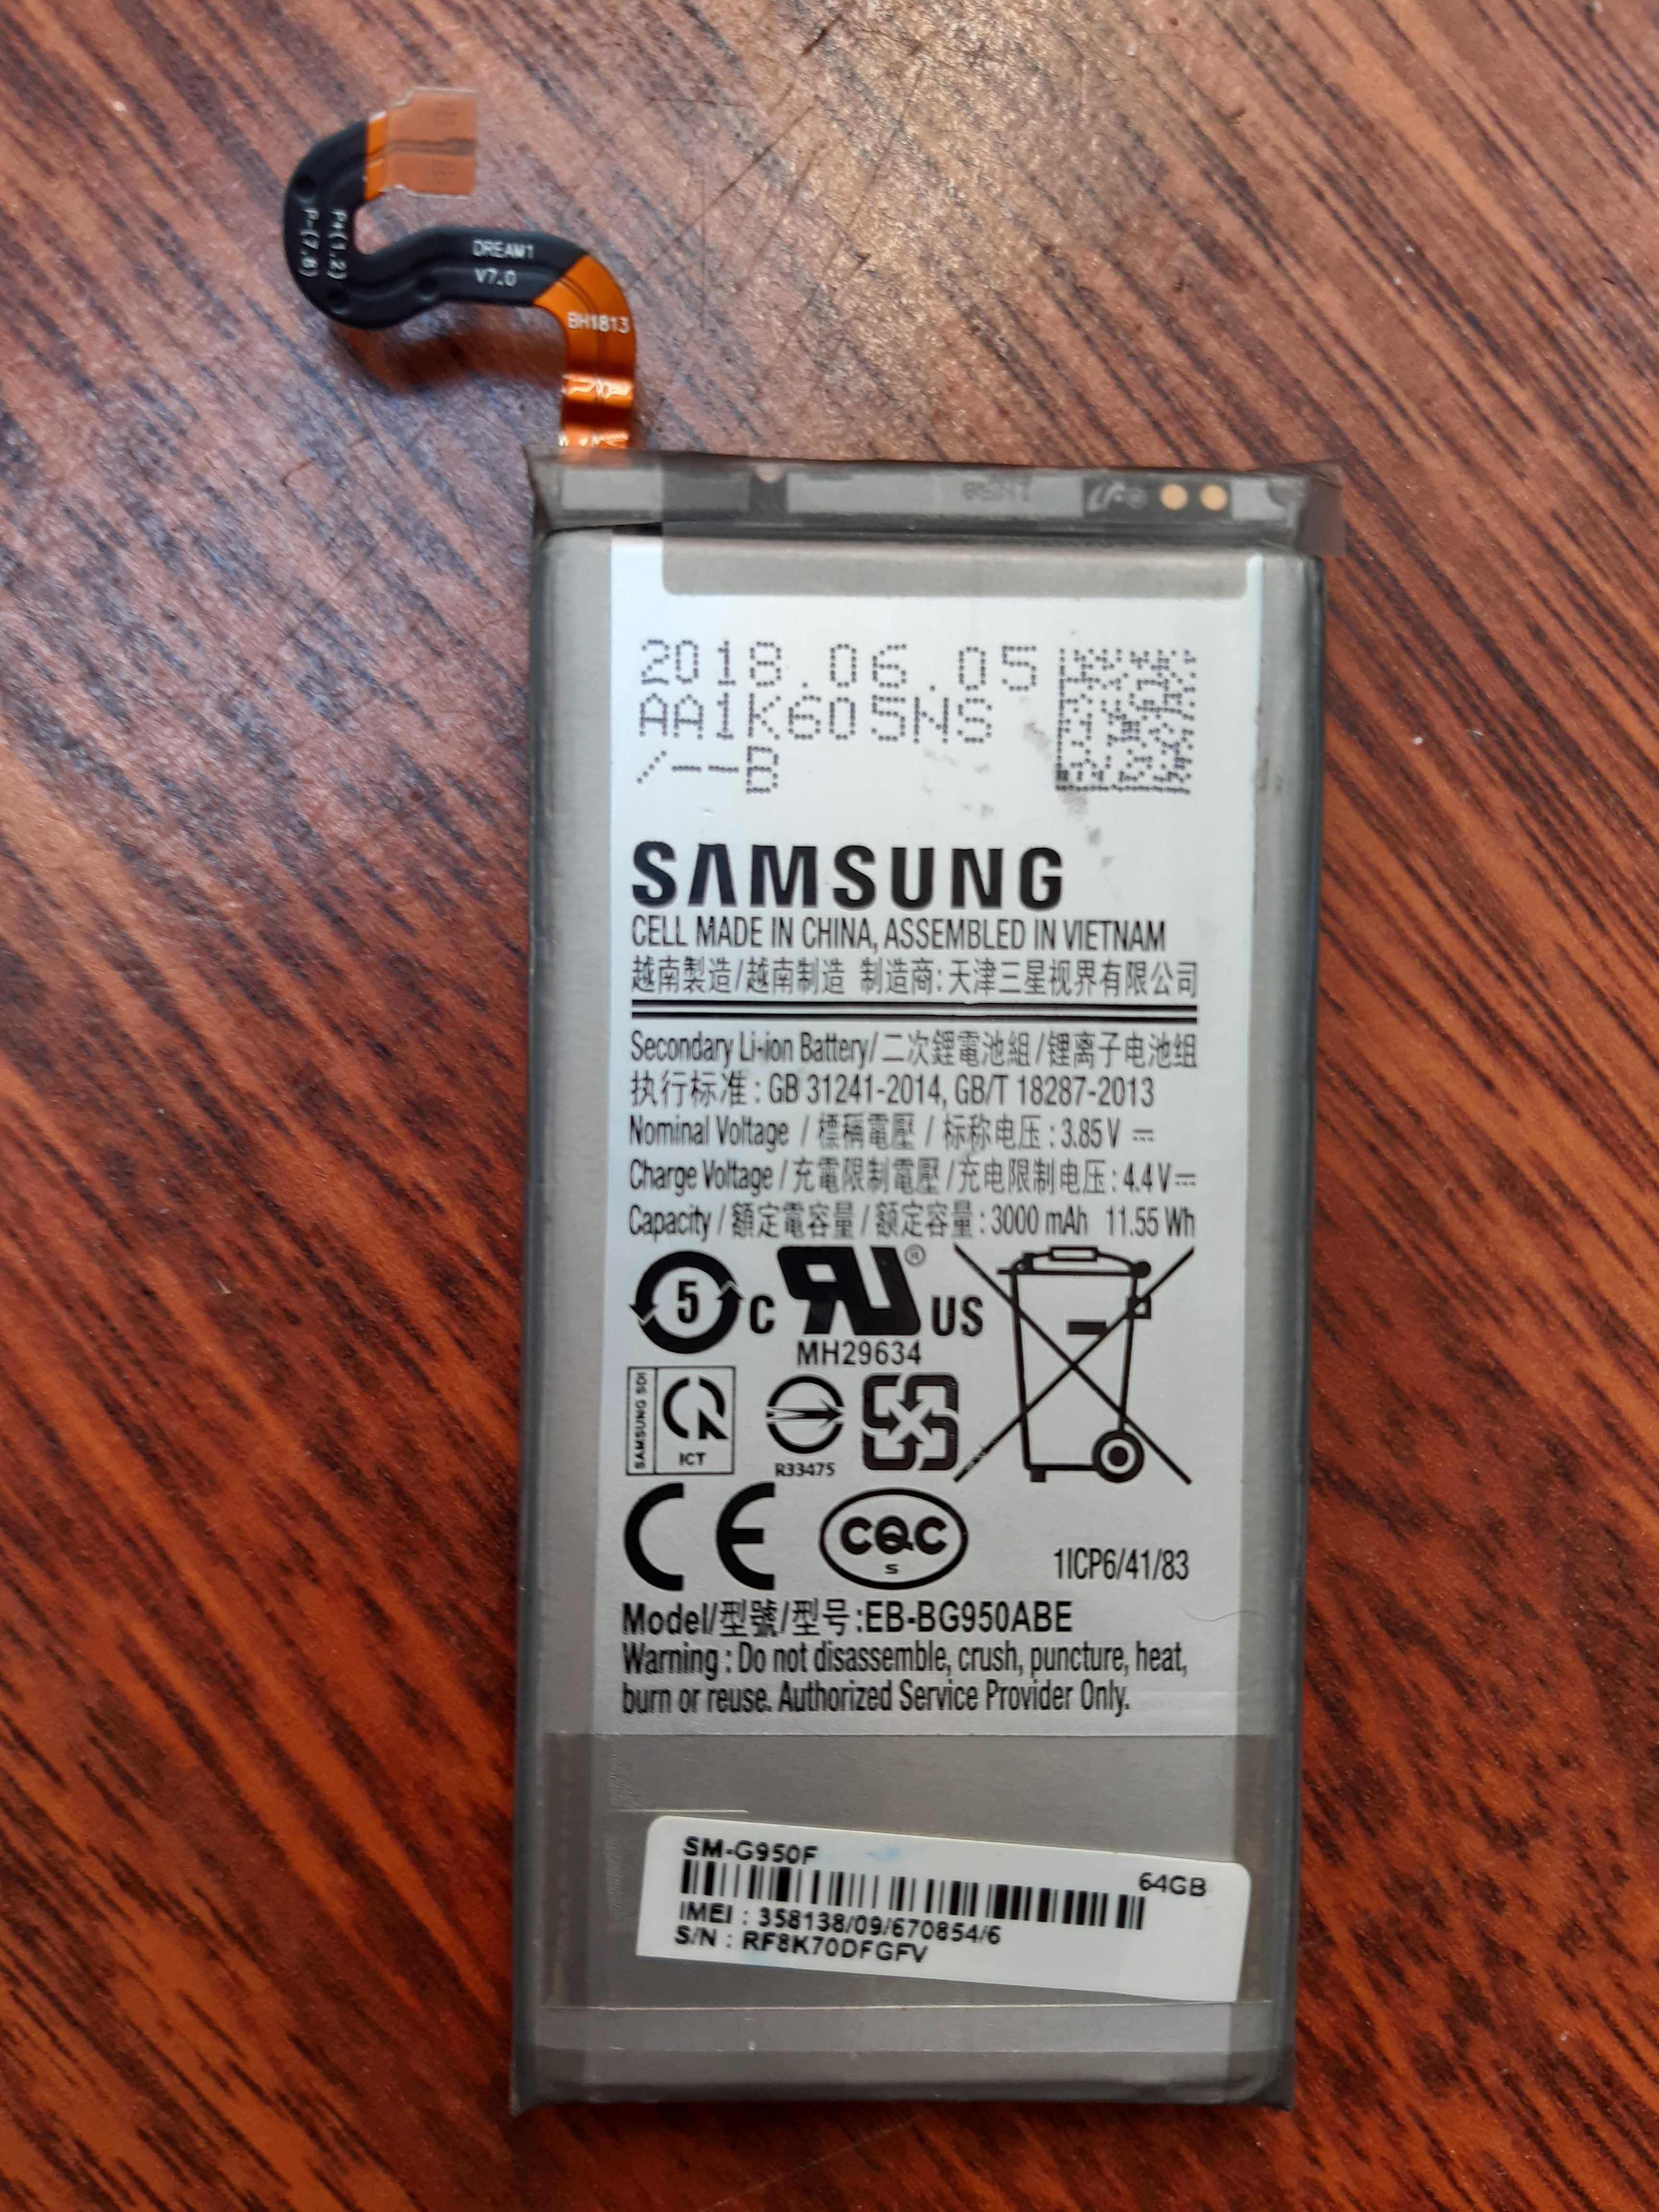 Baterie Samsung SM-G950F, LG IP-430N, LG BL-44JN